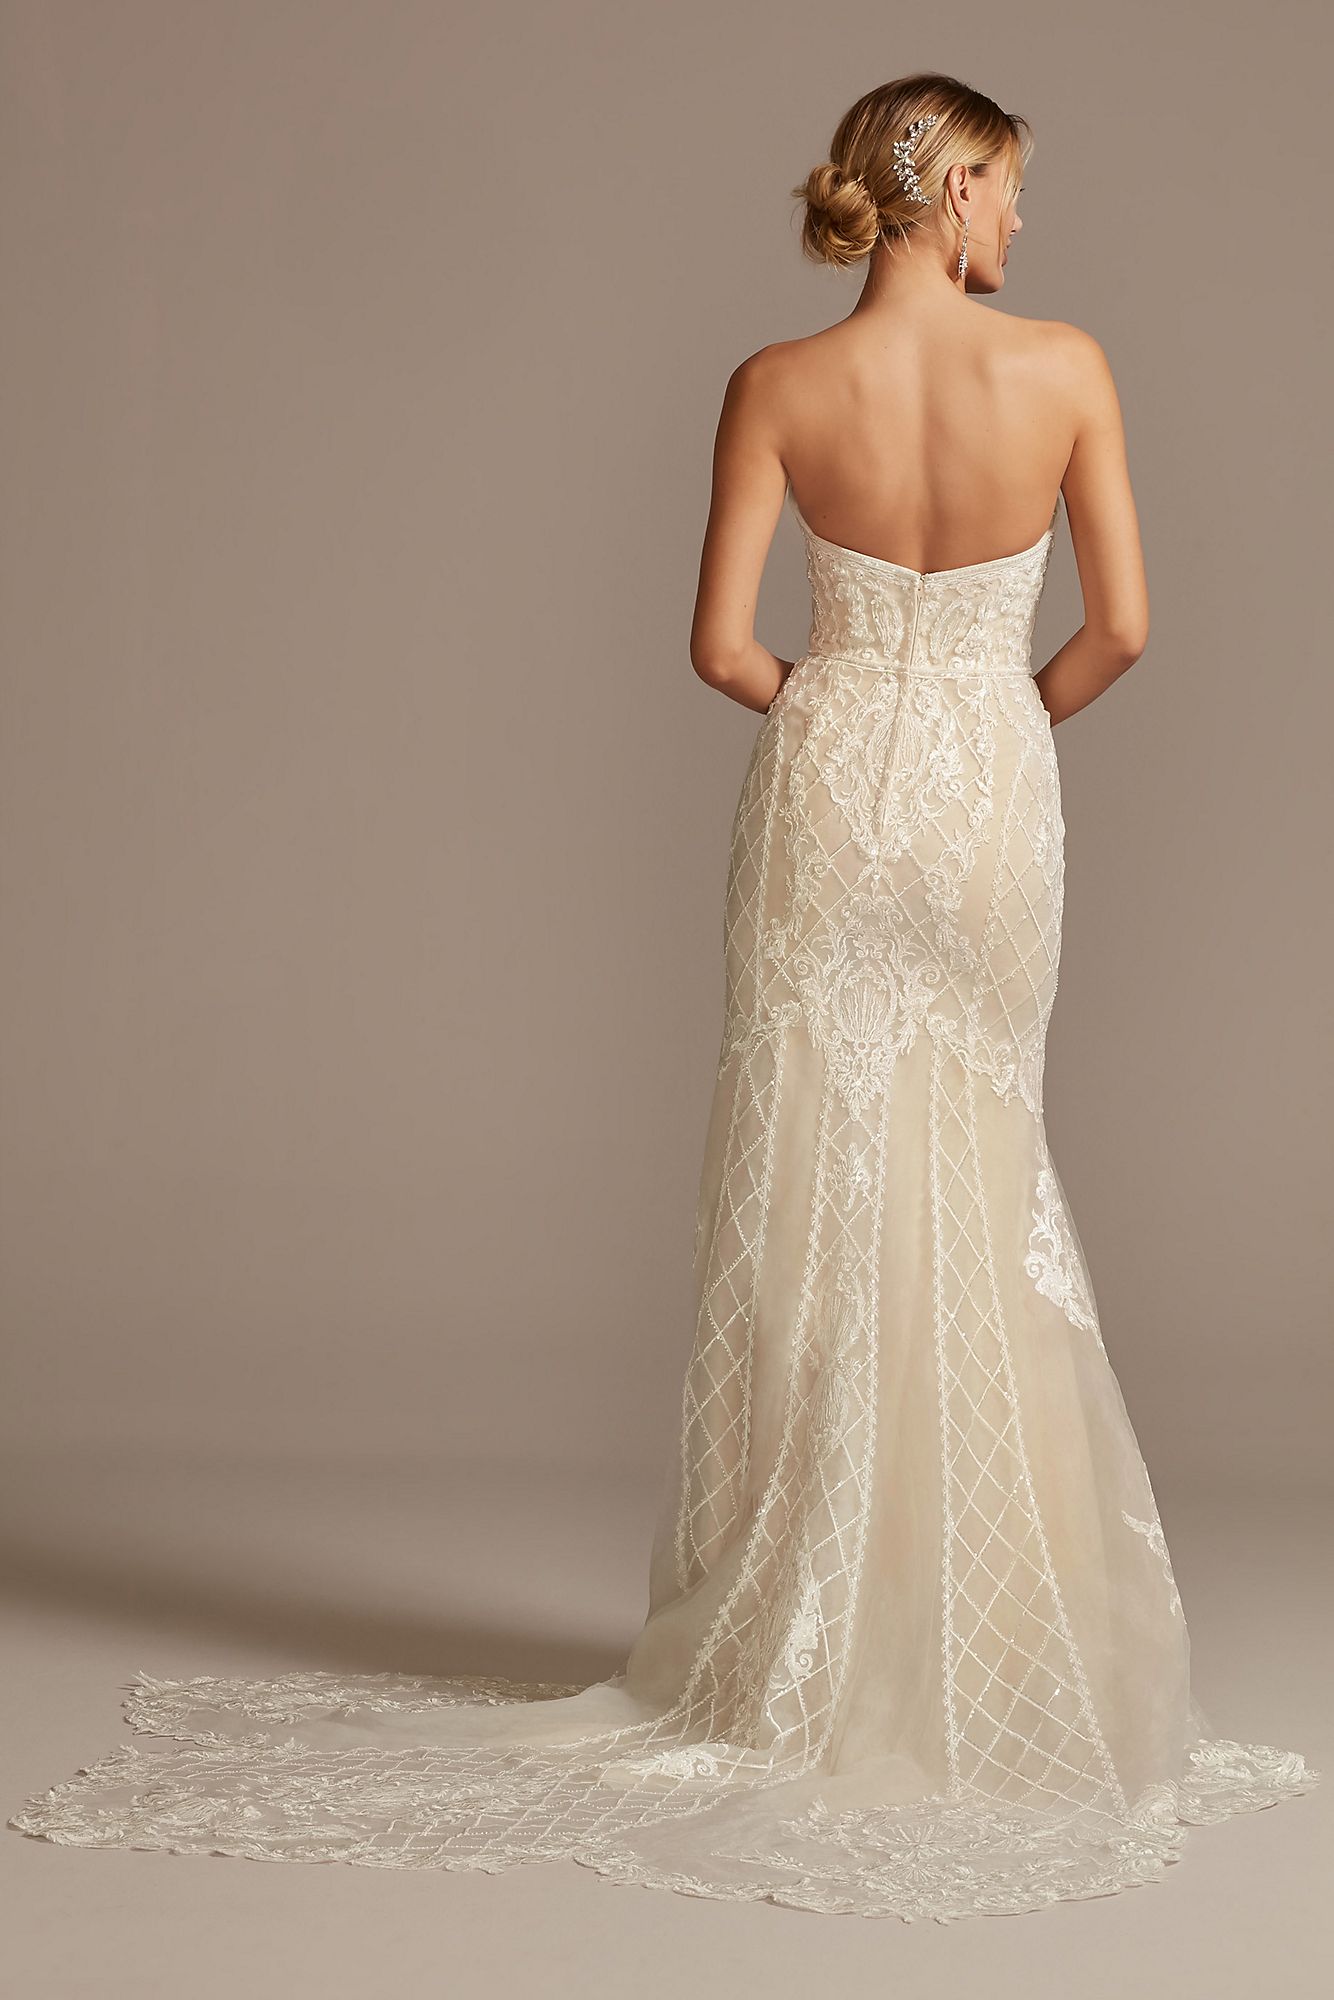 Beaded Scroll and Lace Mermaid Wedding Dress CWG878